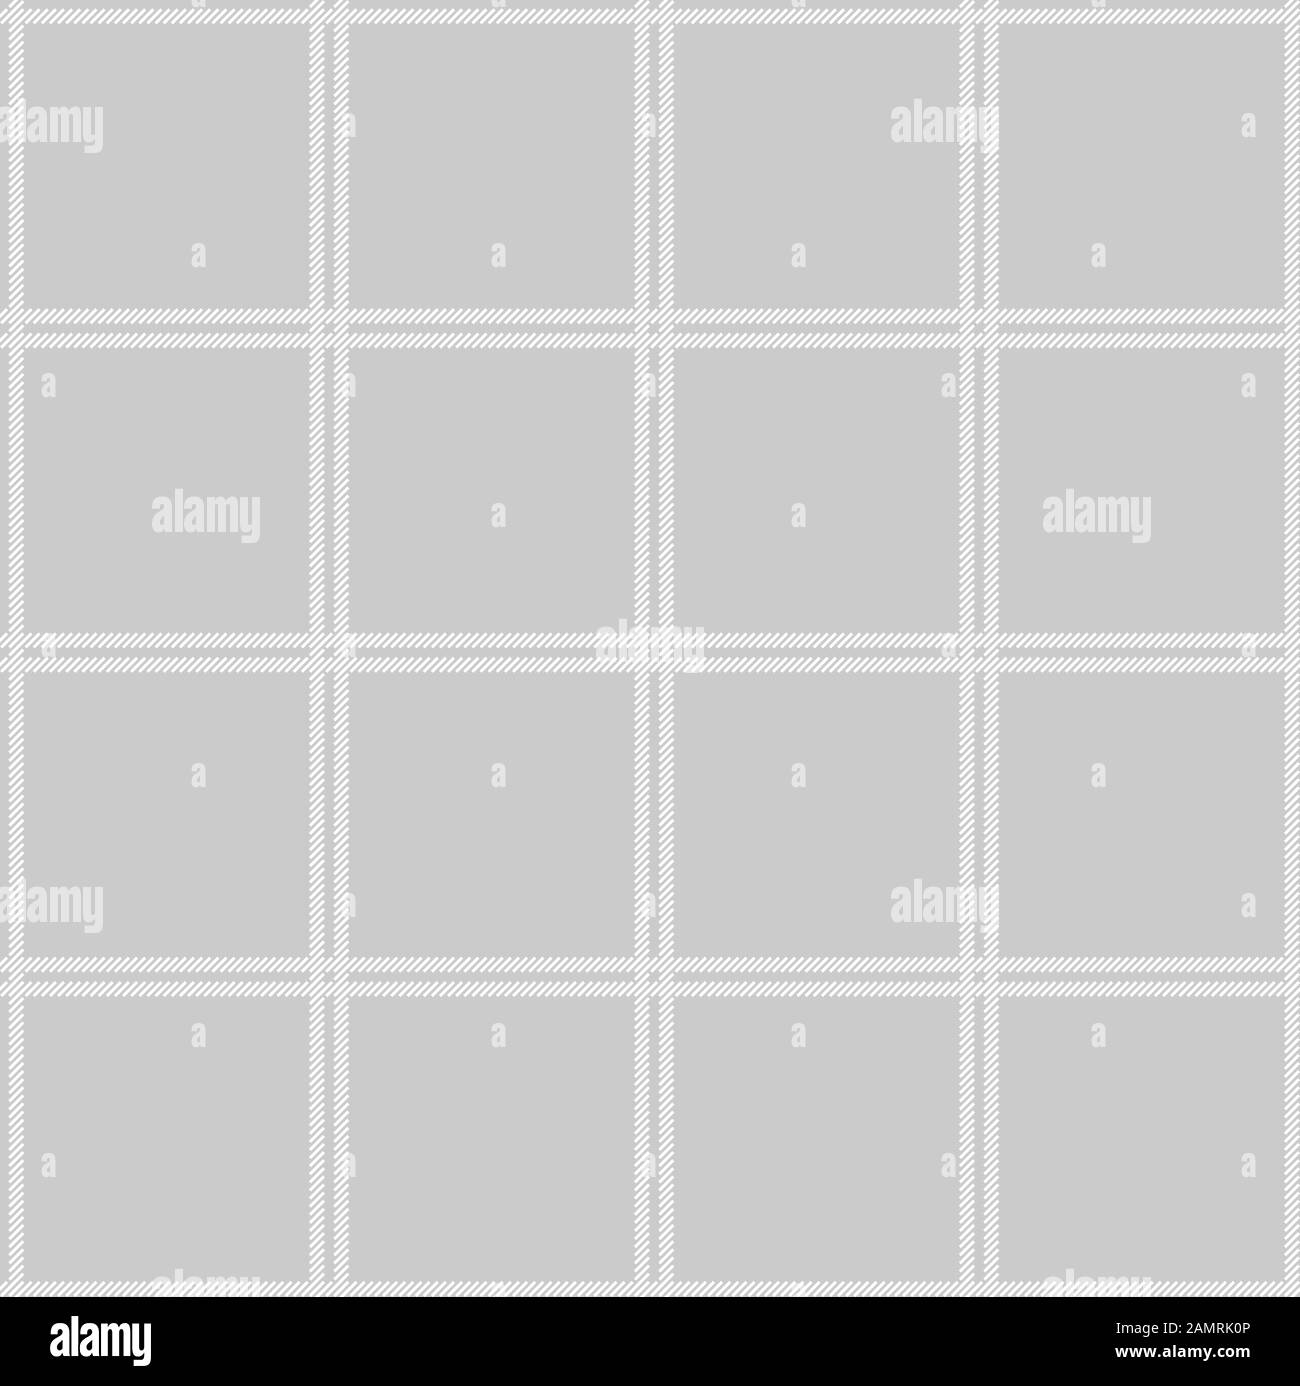 Tartan pattern Black and White Stock Photos & Images - Alamy